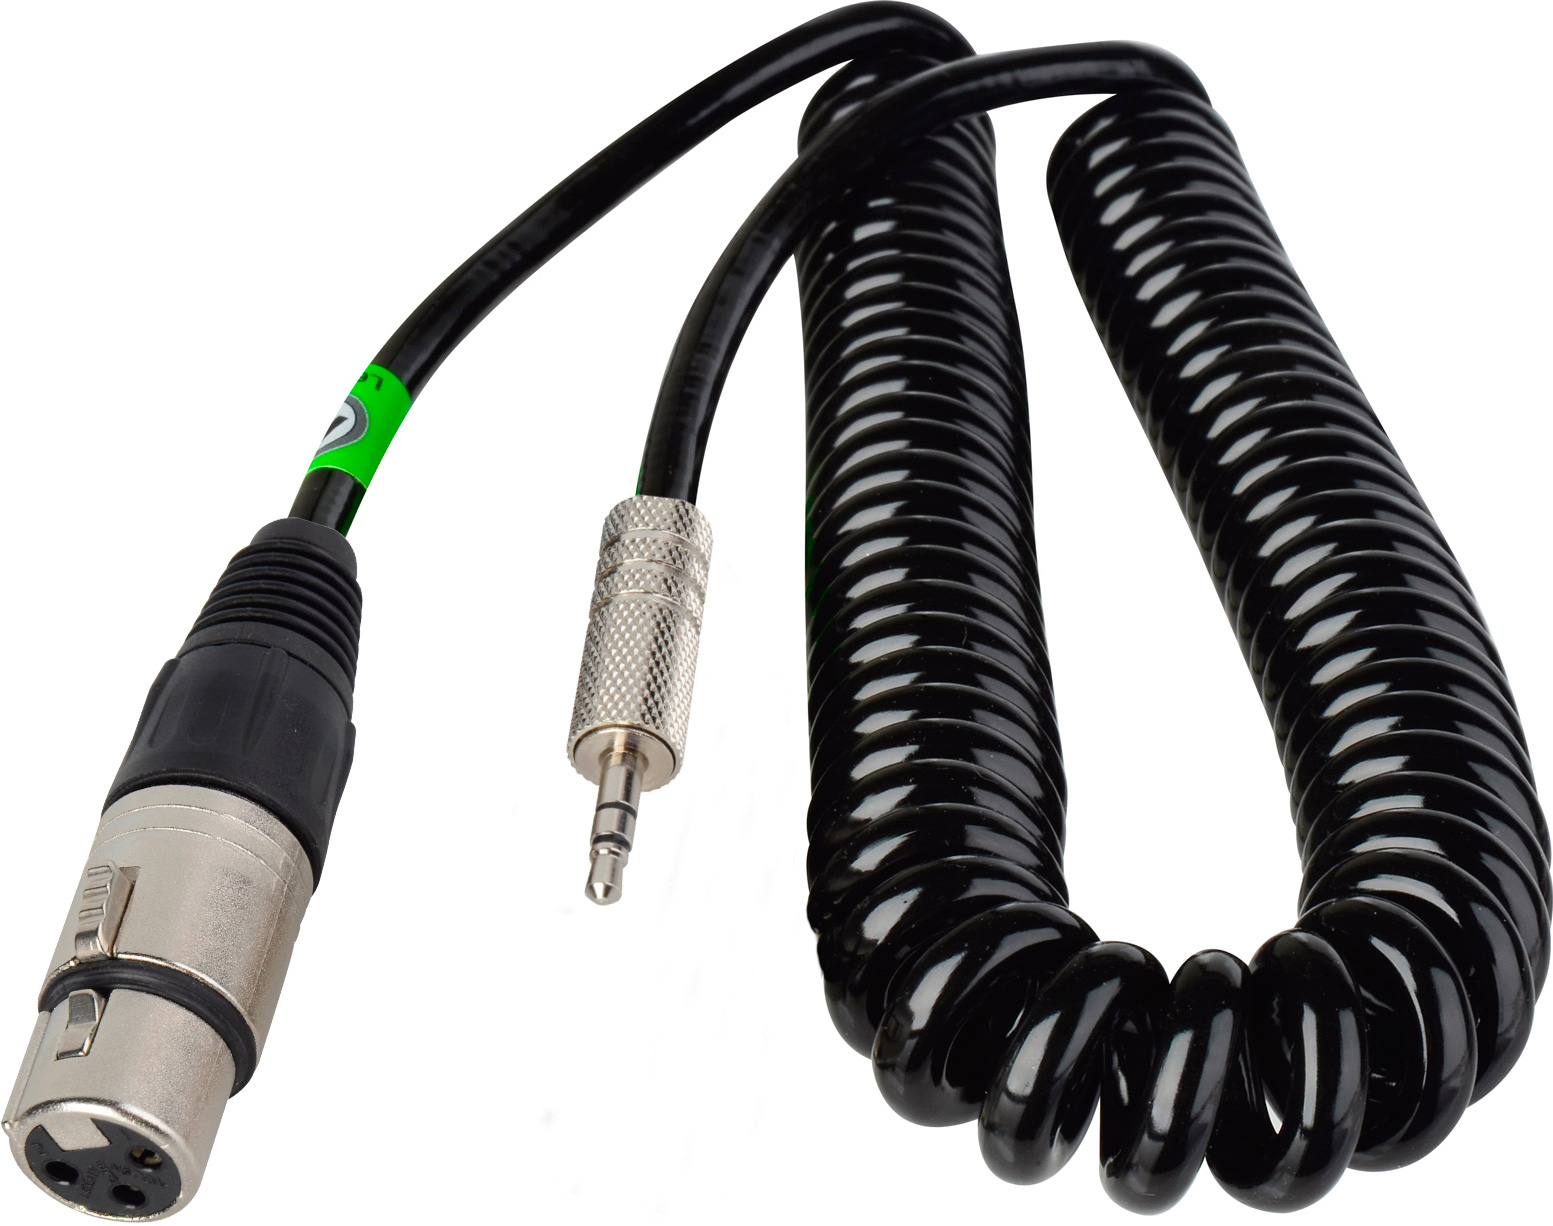 Mini to XLR Cables